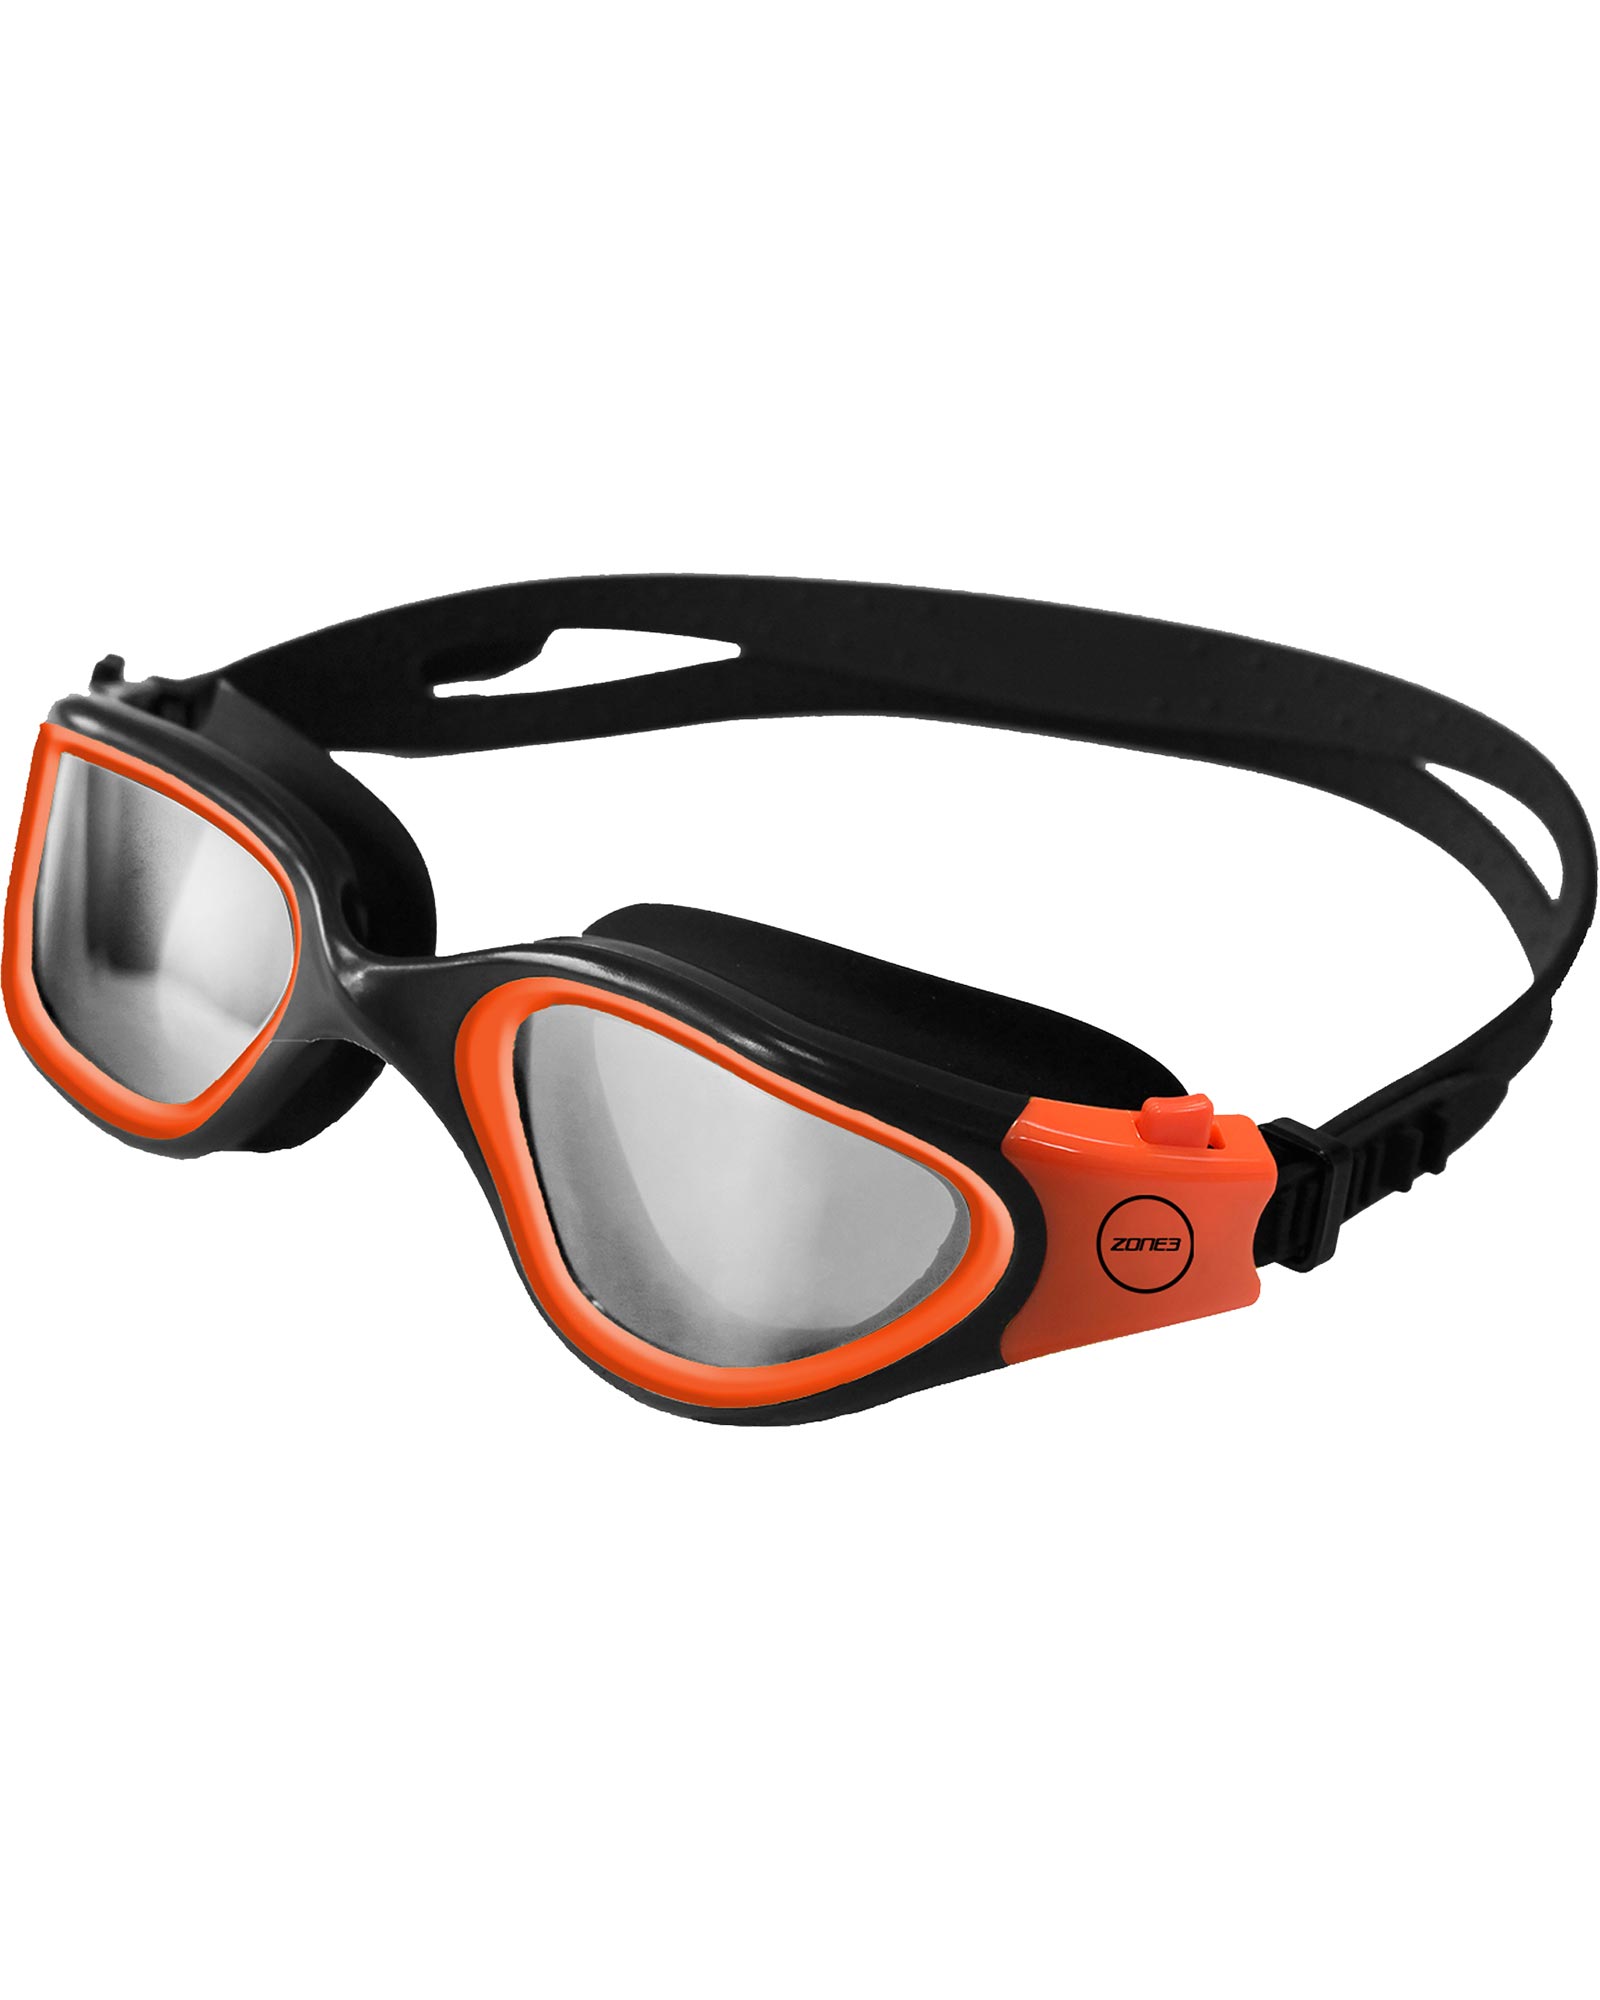 Zone3 Vapour Goggles - Black/Orange/Photochromic